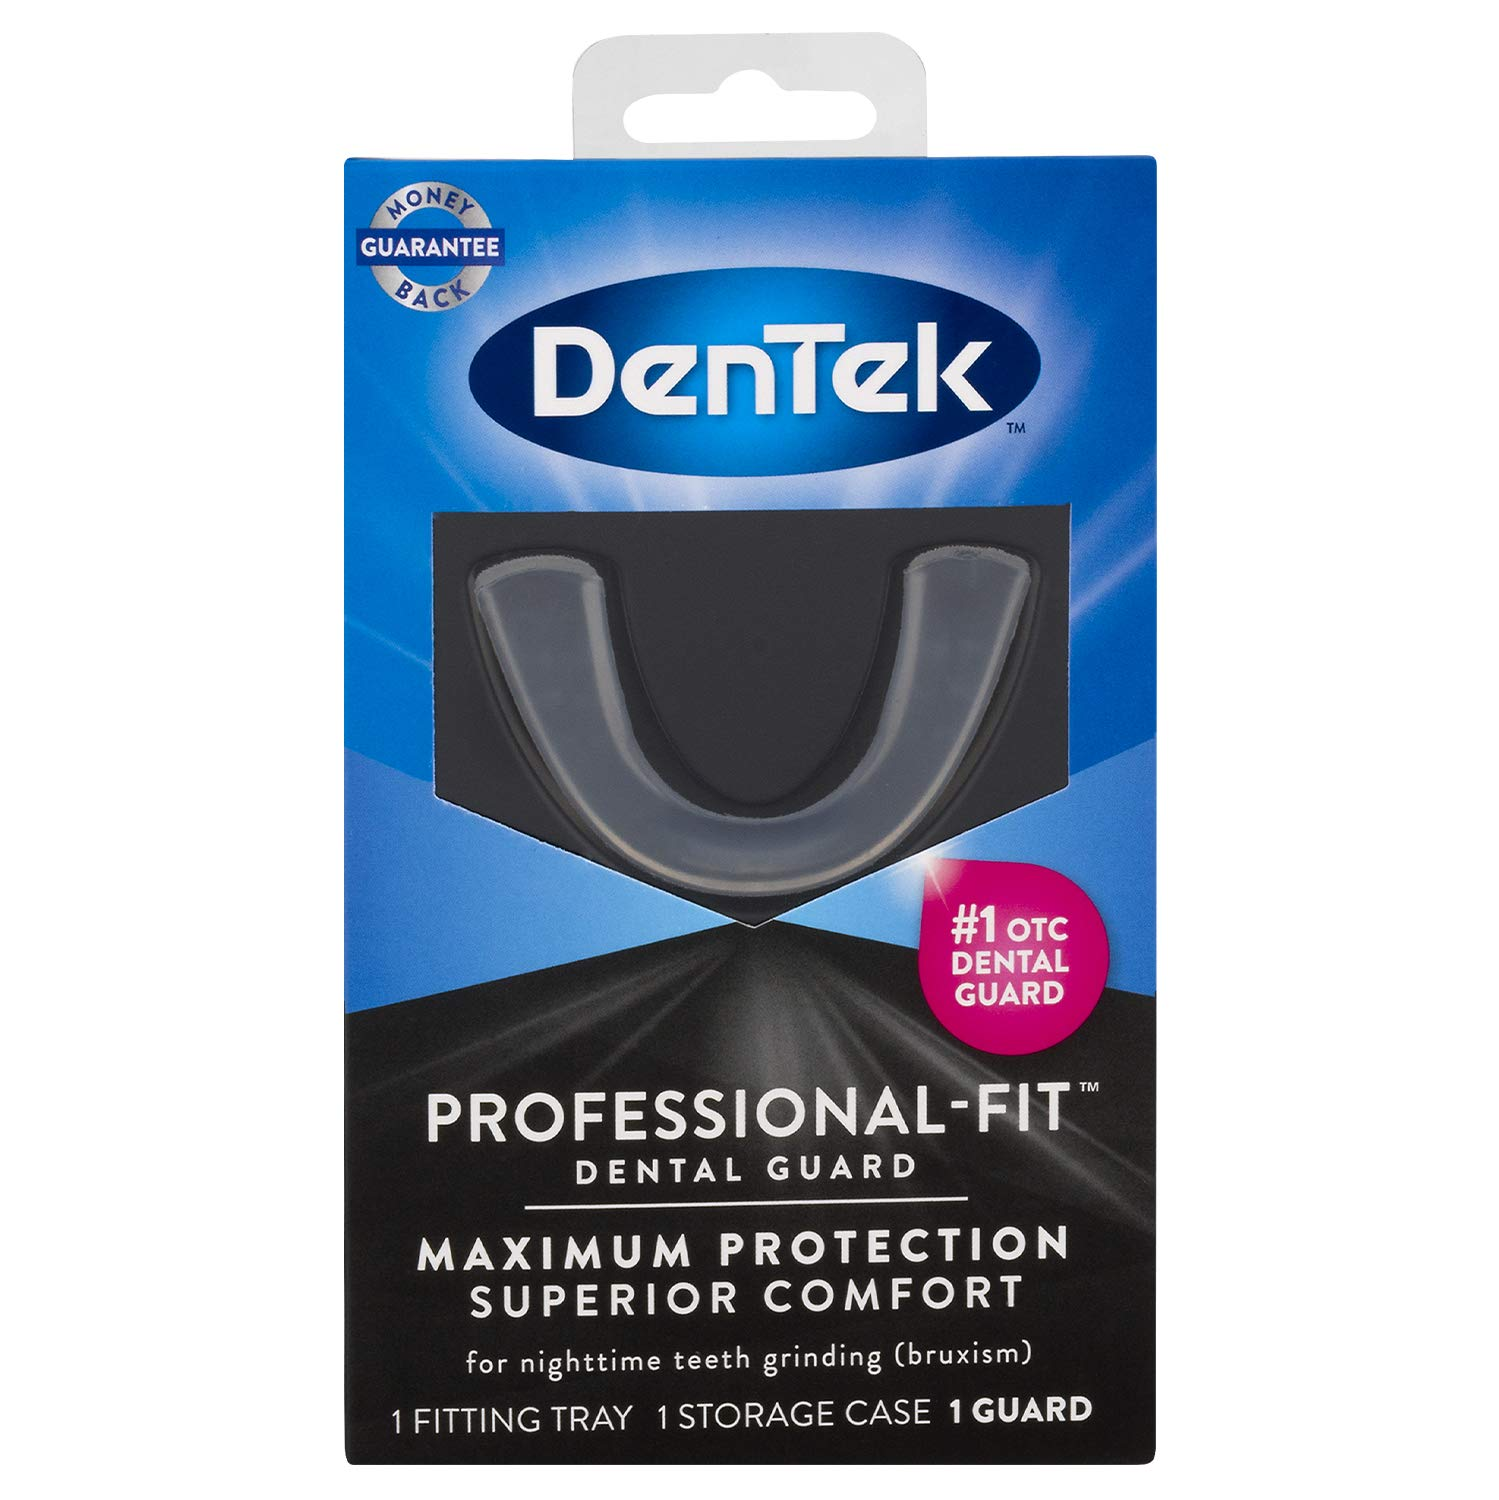 DenTek Professional-Fit - Maximum Protection Dental Guard For Teeth Grinding $13.69